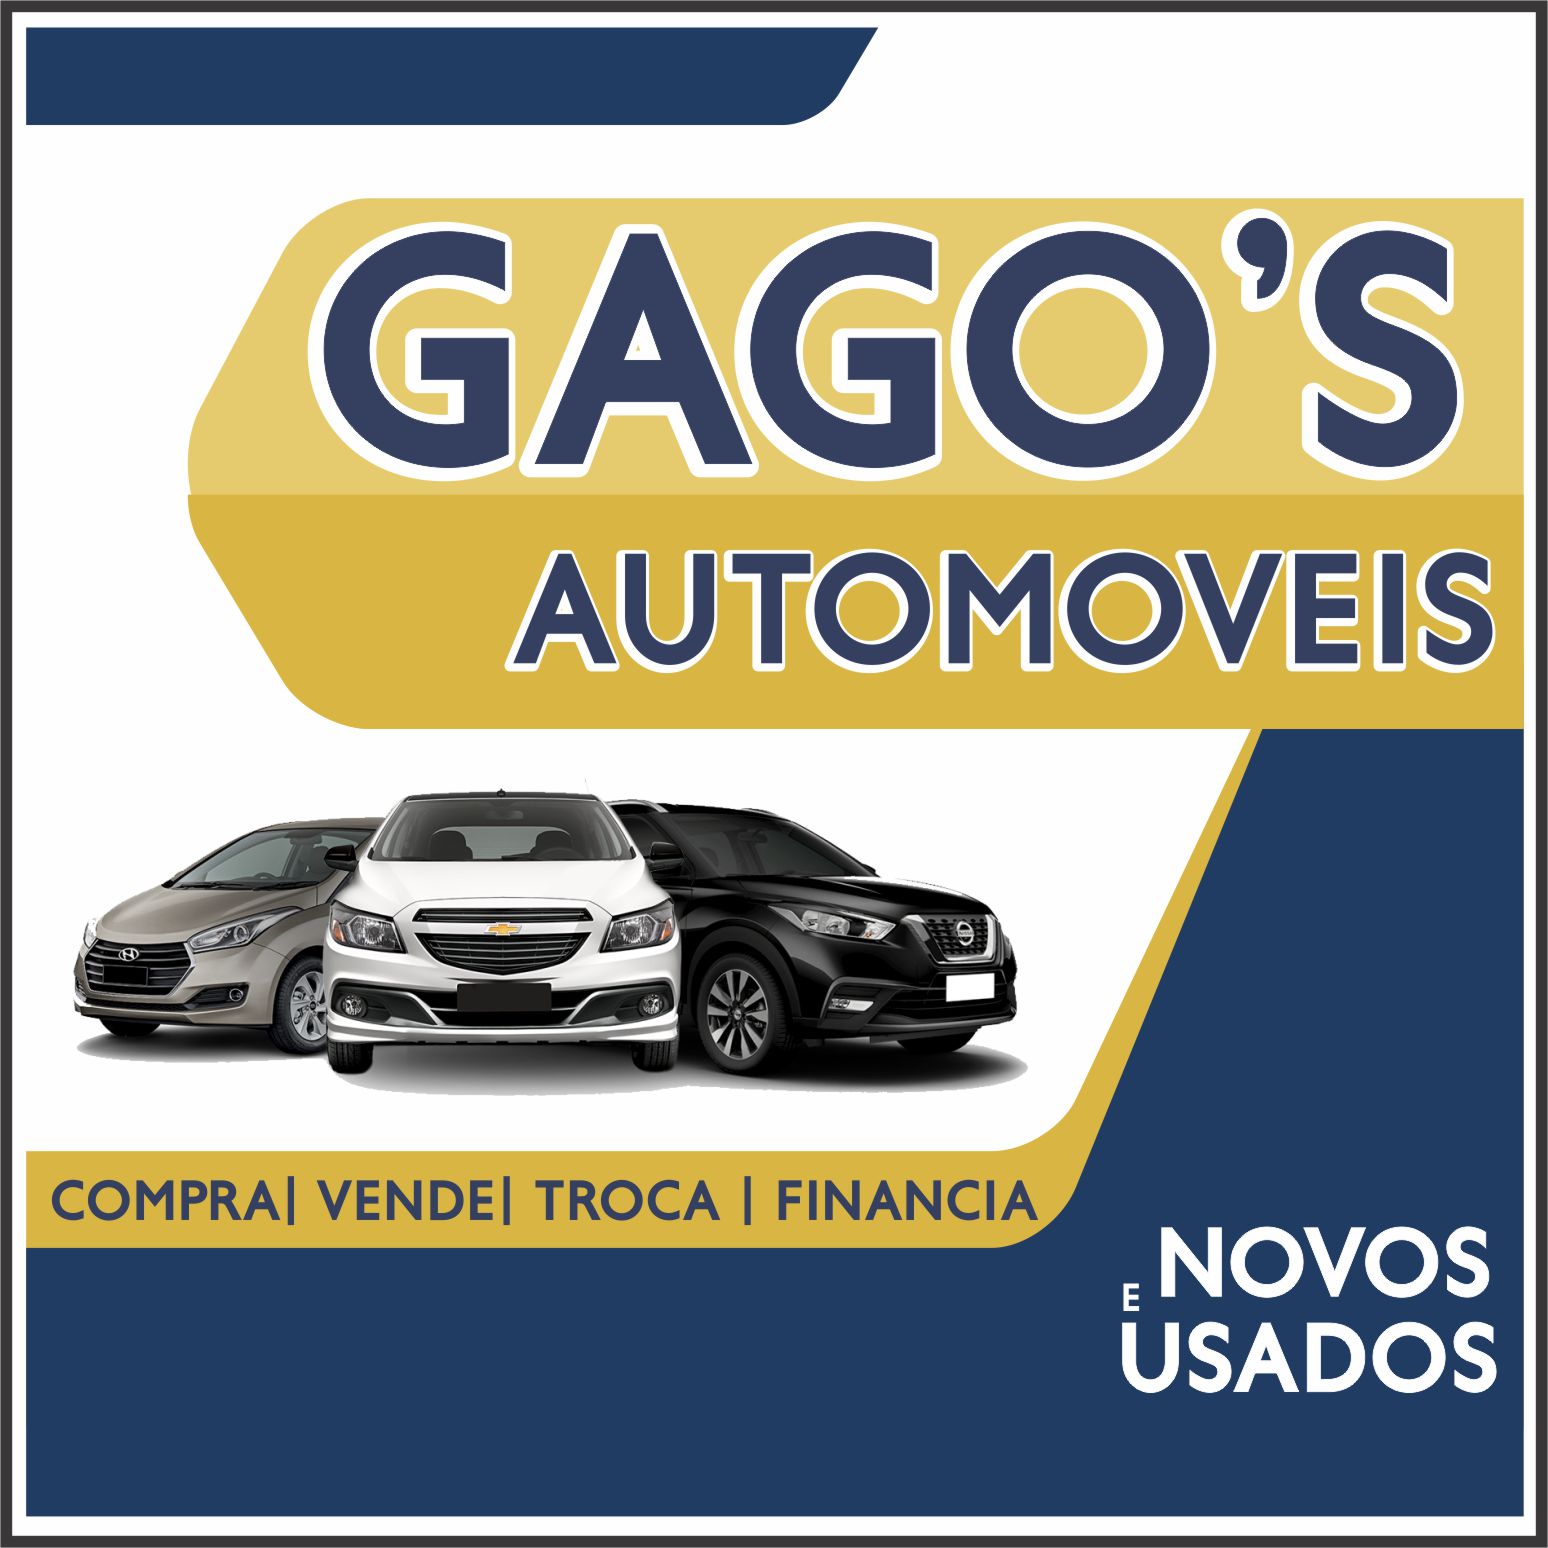 Gago's Automóveis